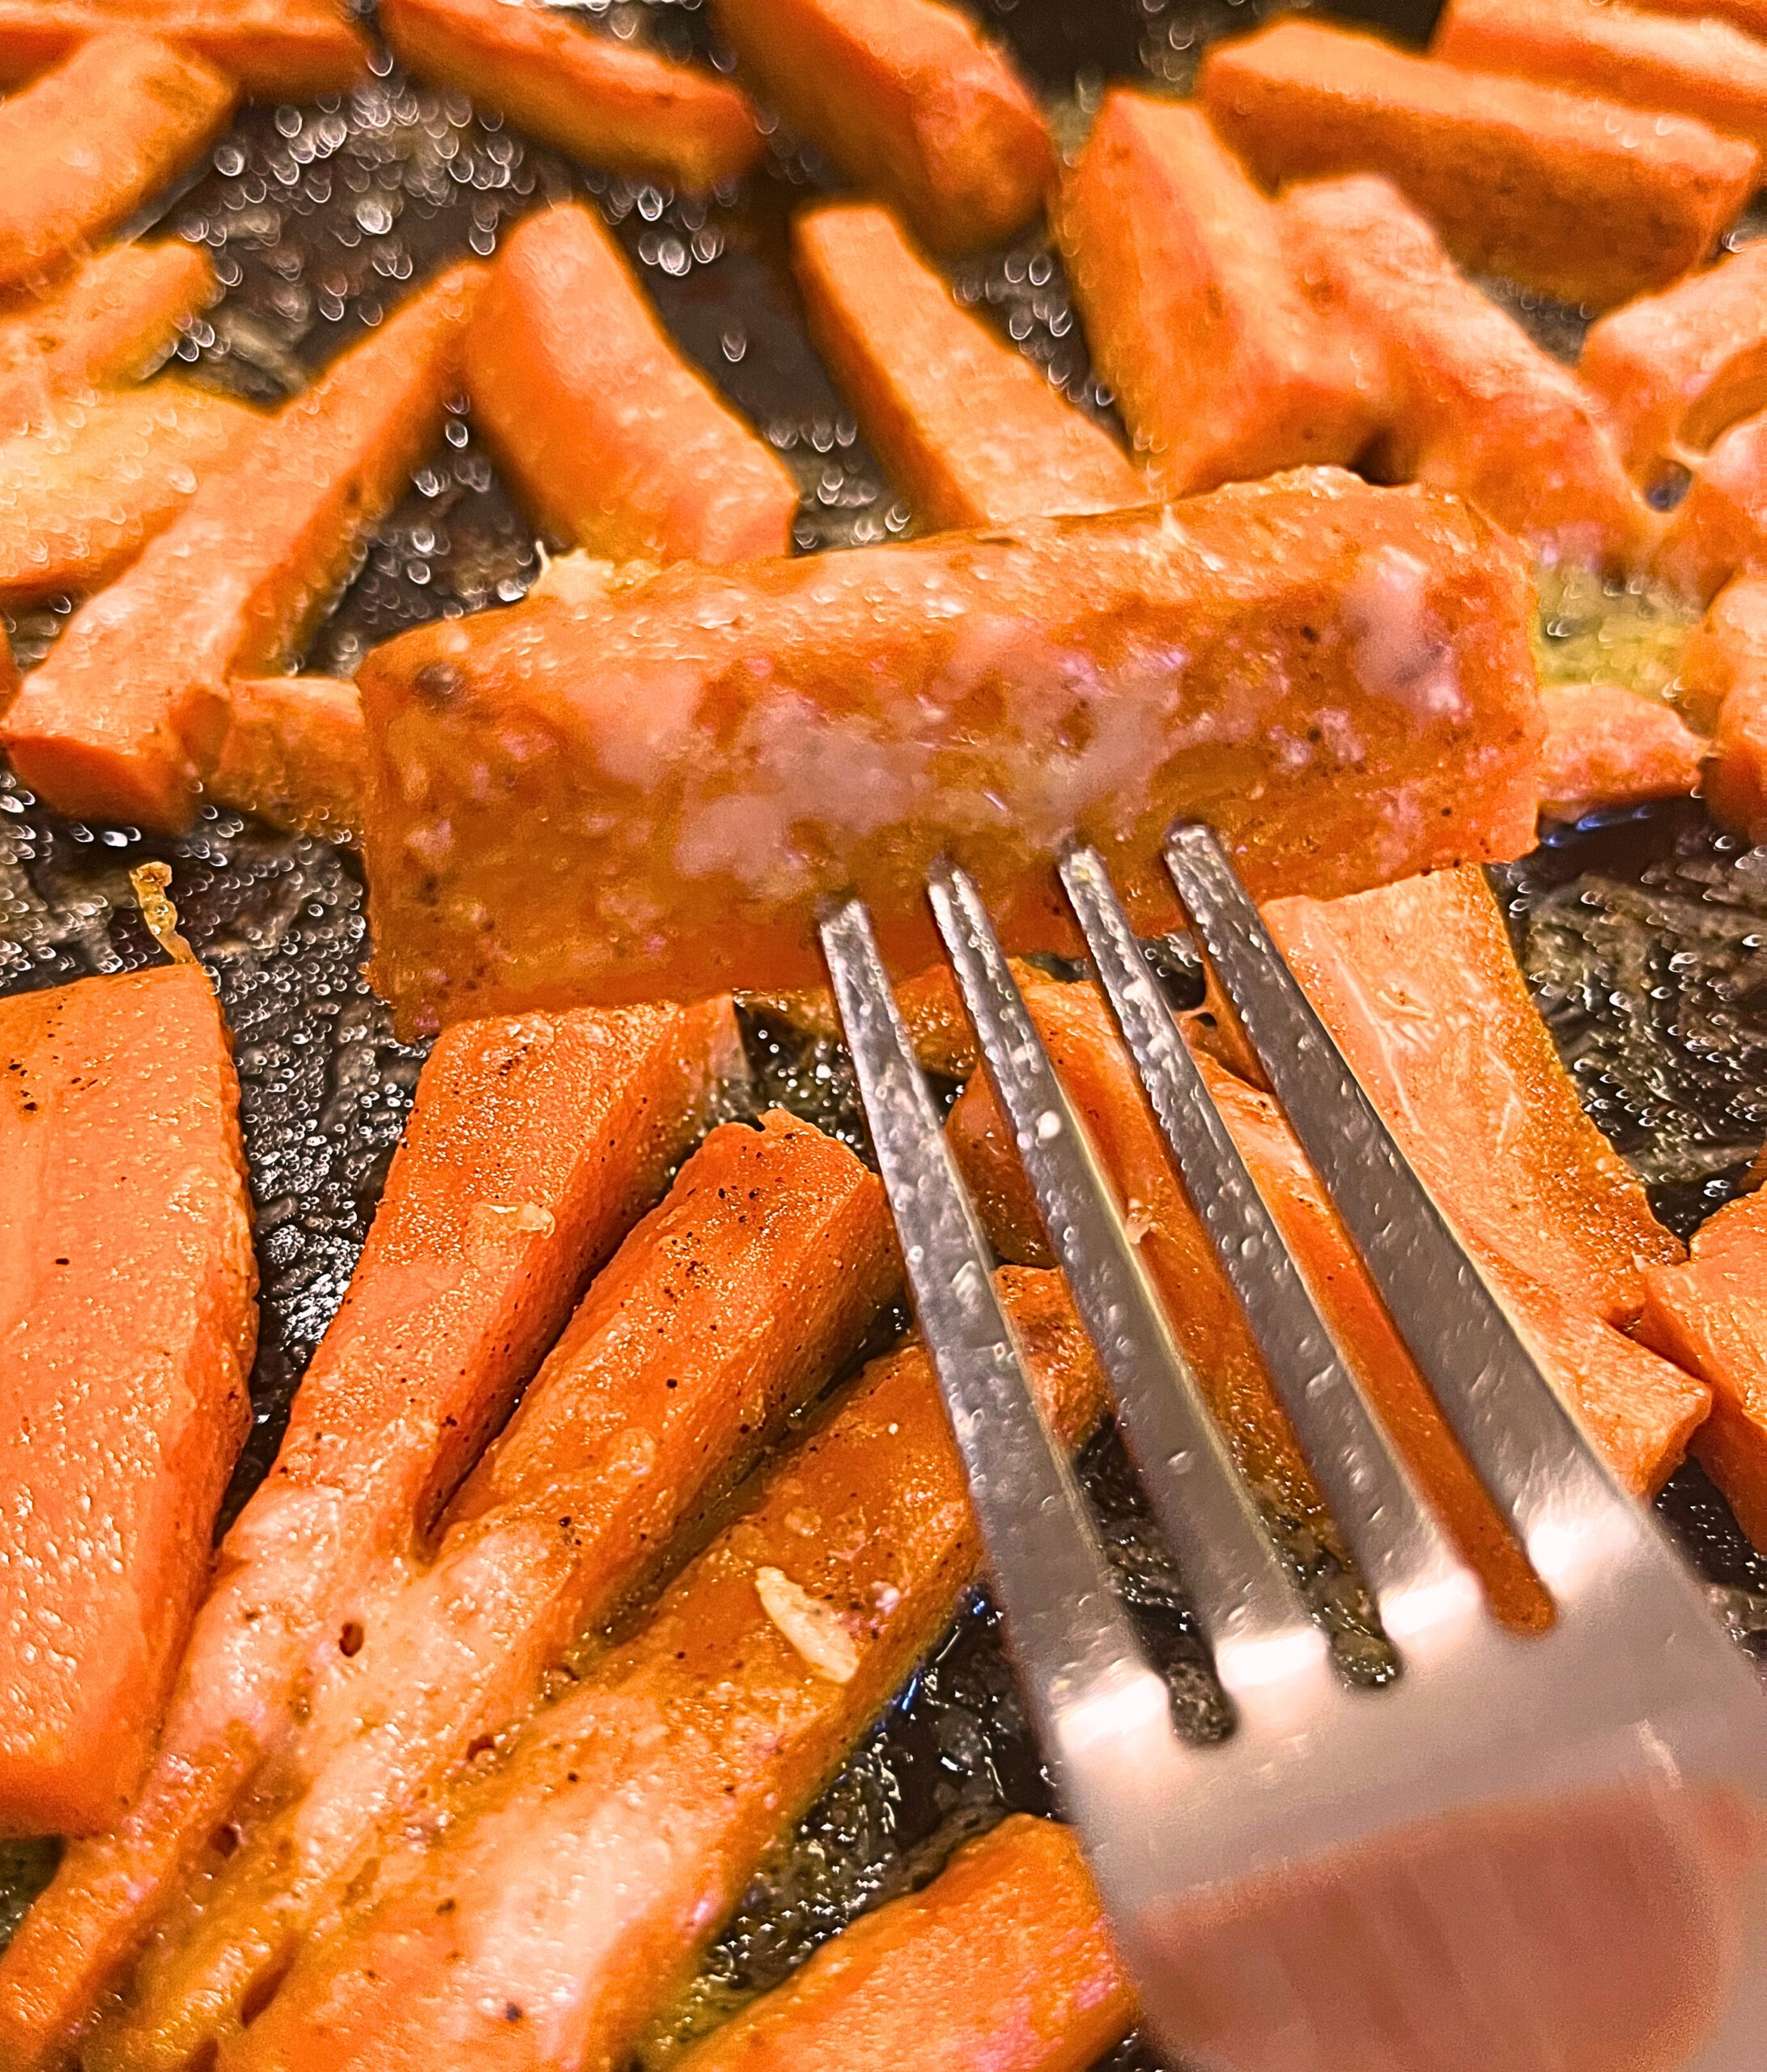 Oven roasted carrots recipe #carrots #easysides #carrot recipes #carrotssidedish #carrotsintheairfryer